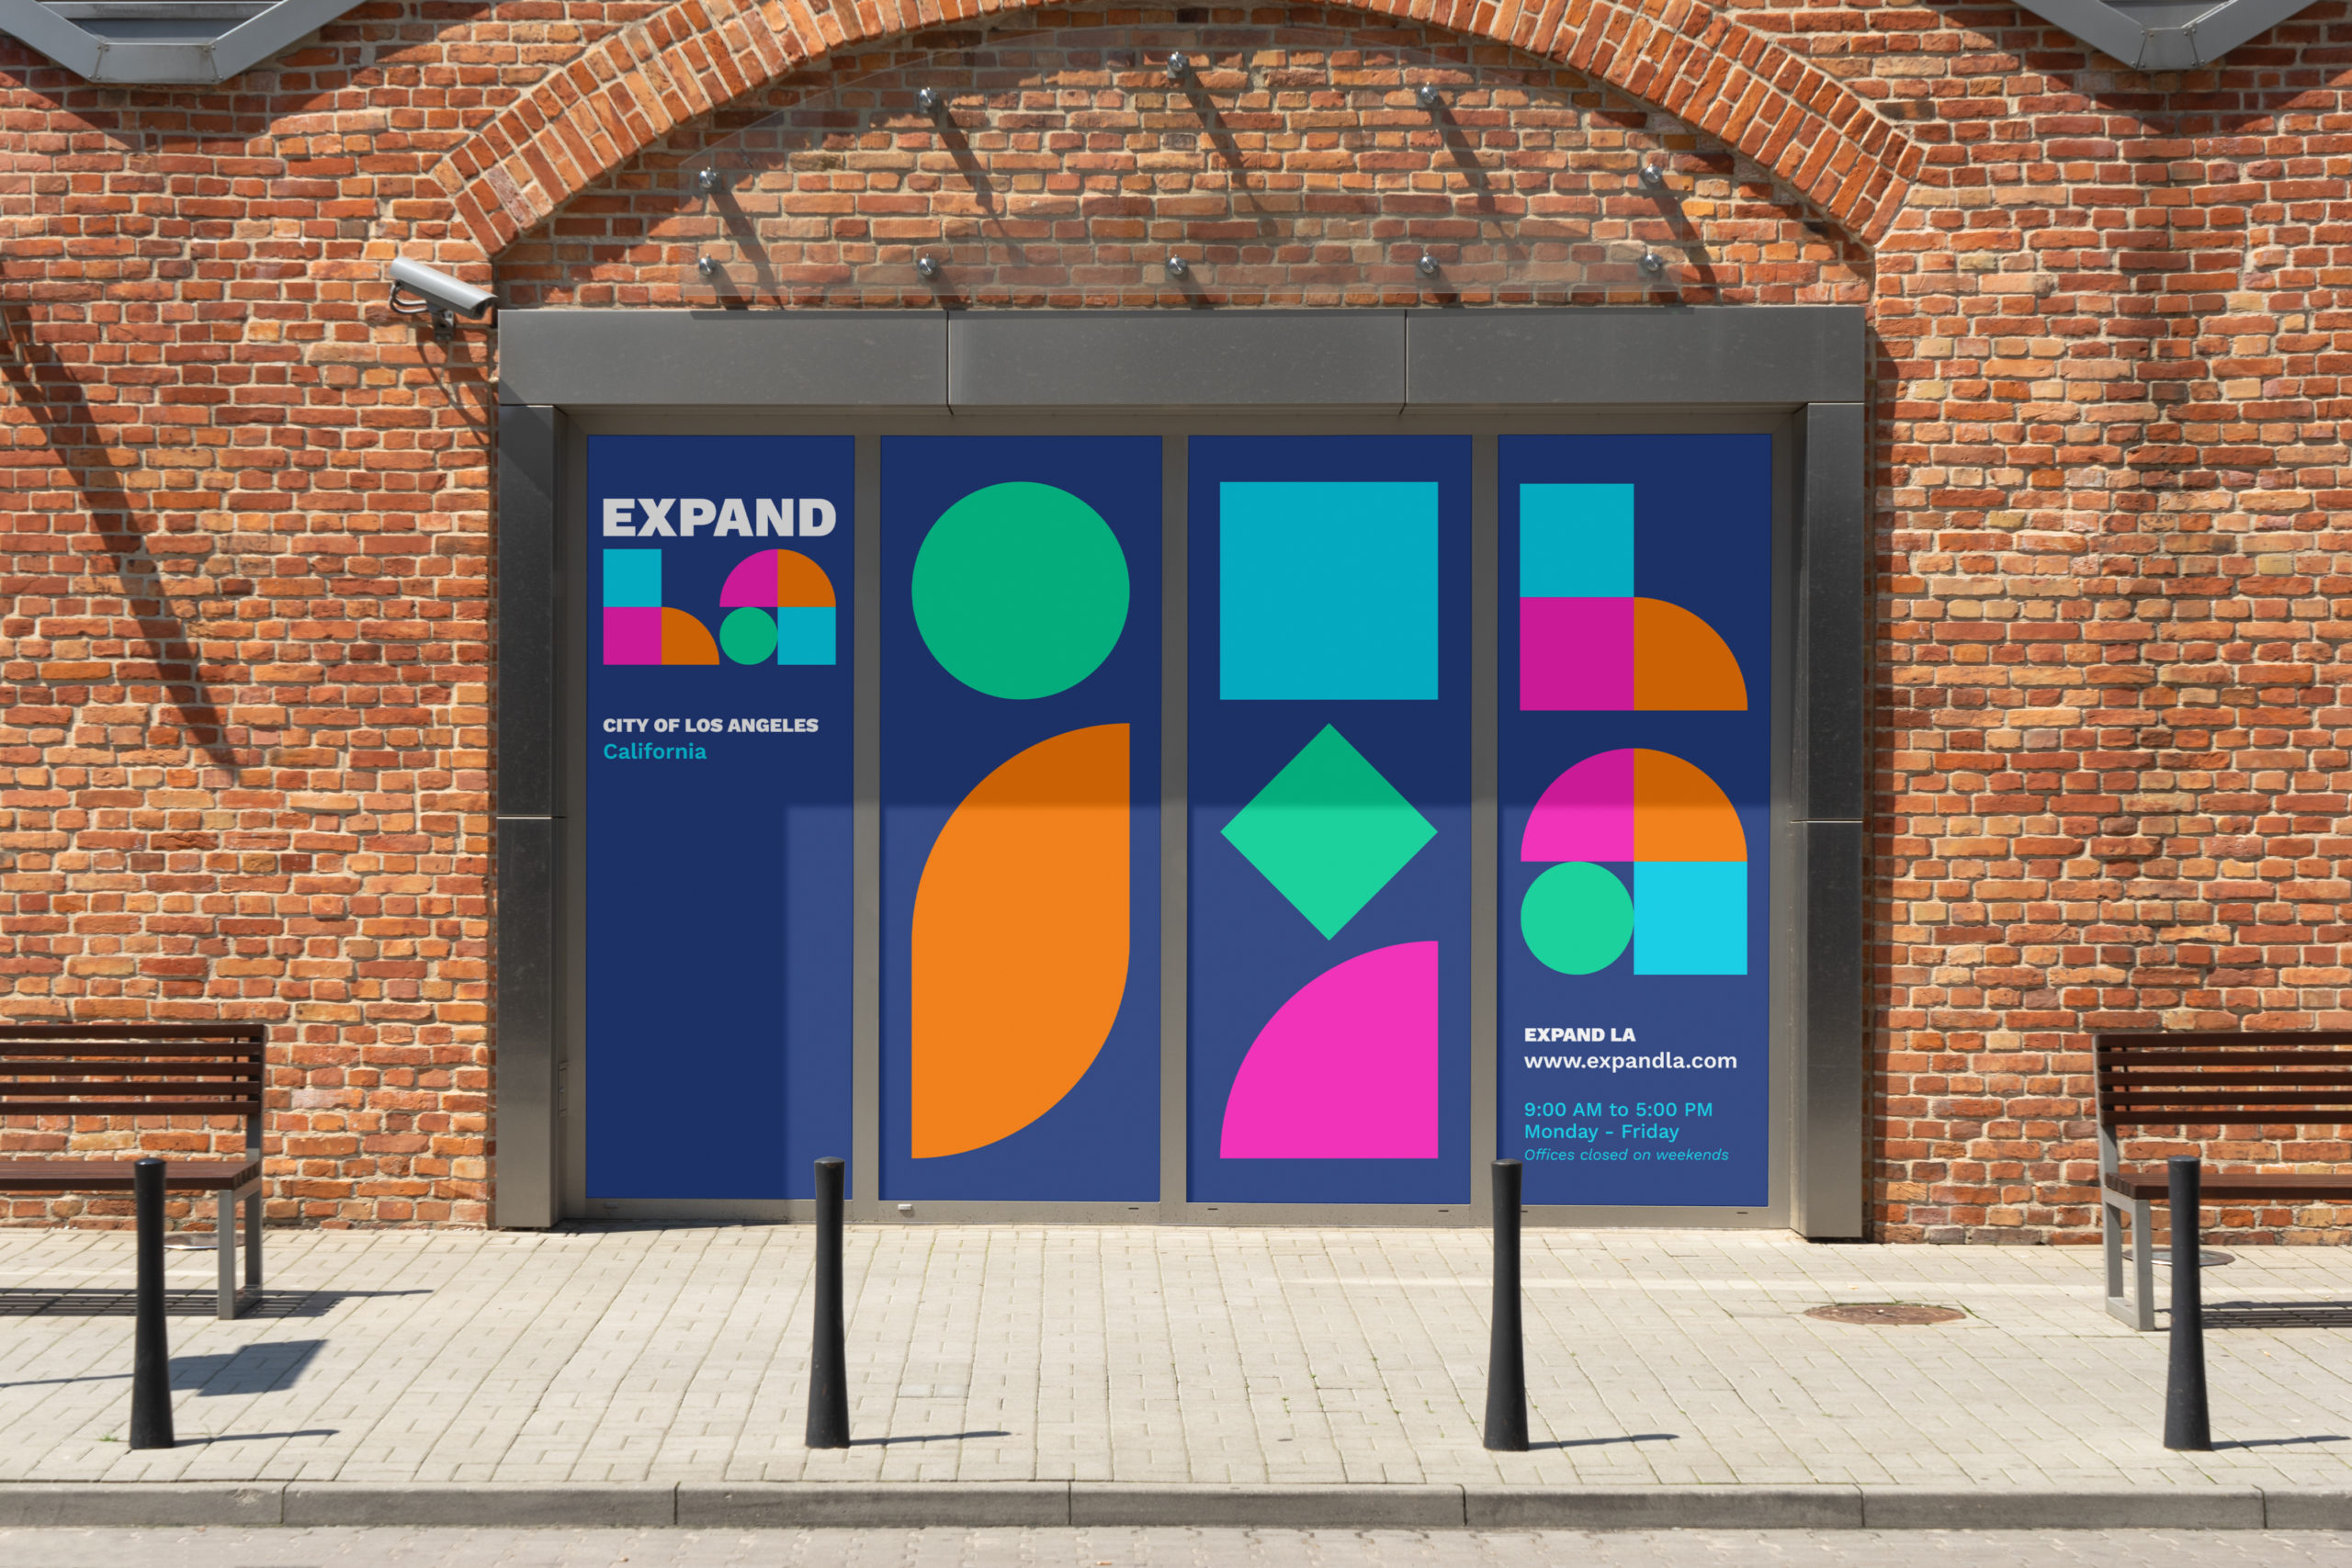 Window signage for ExpandLA brand designed by Kilter.